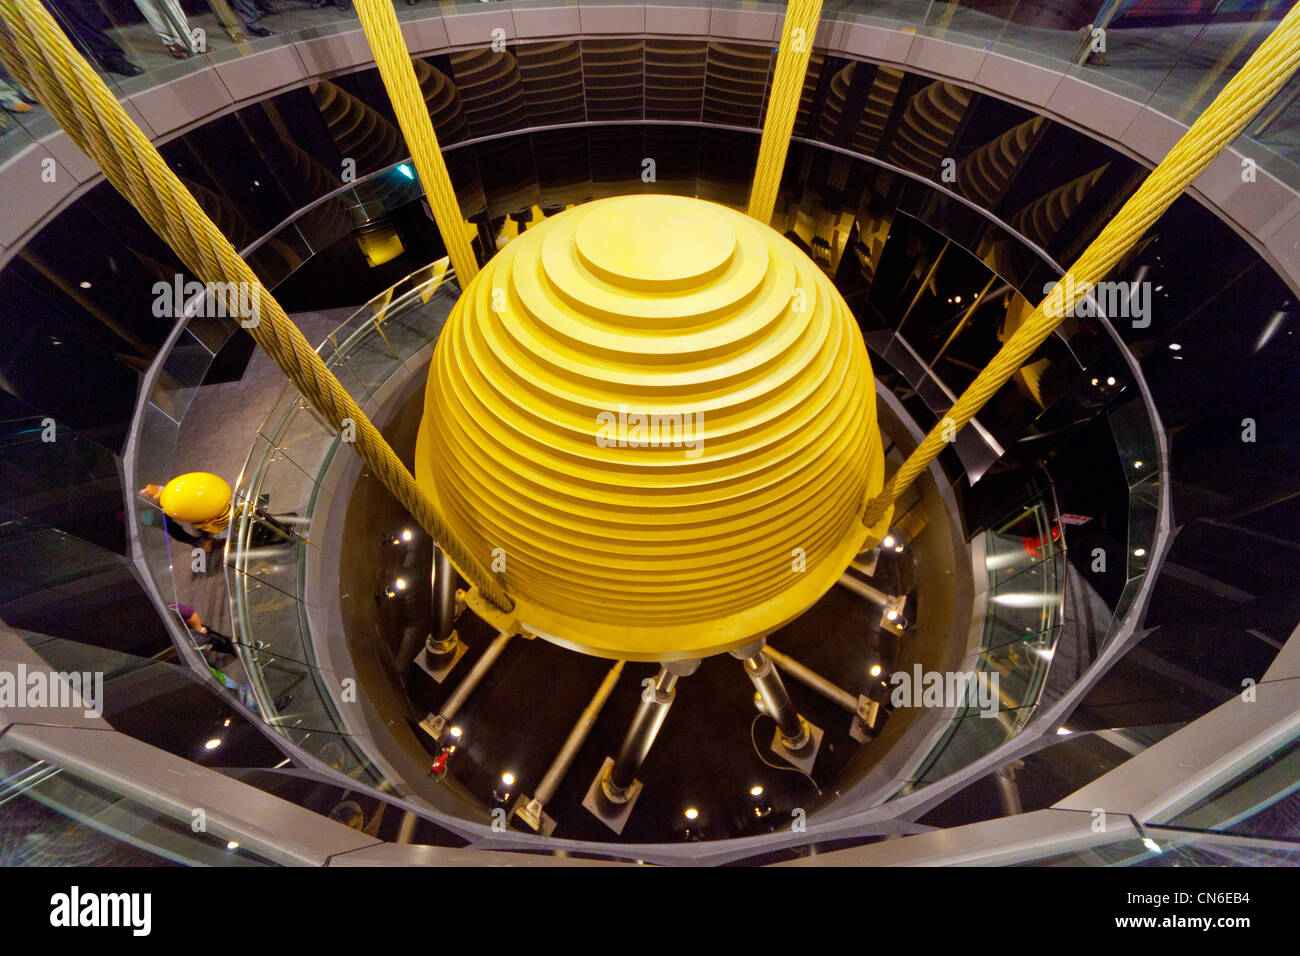 Tuned mass damper pendulum weighing 660 tonnes atop Taipei 101 ...